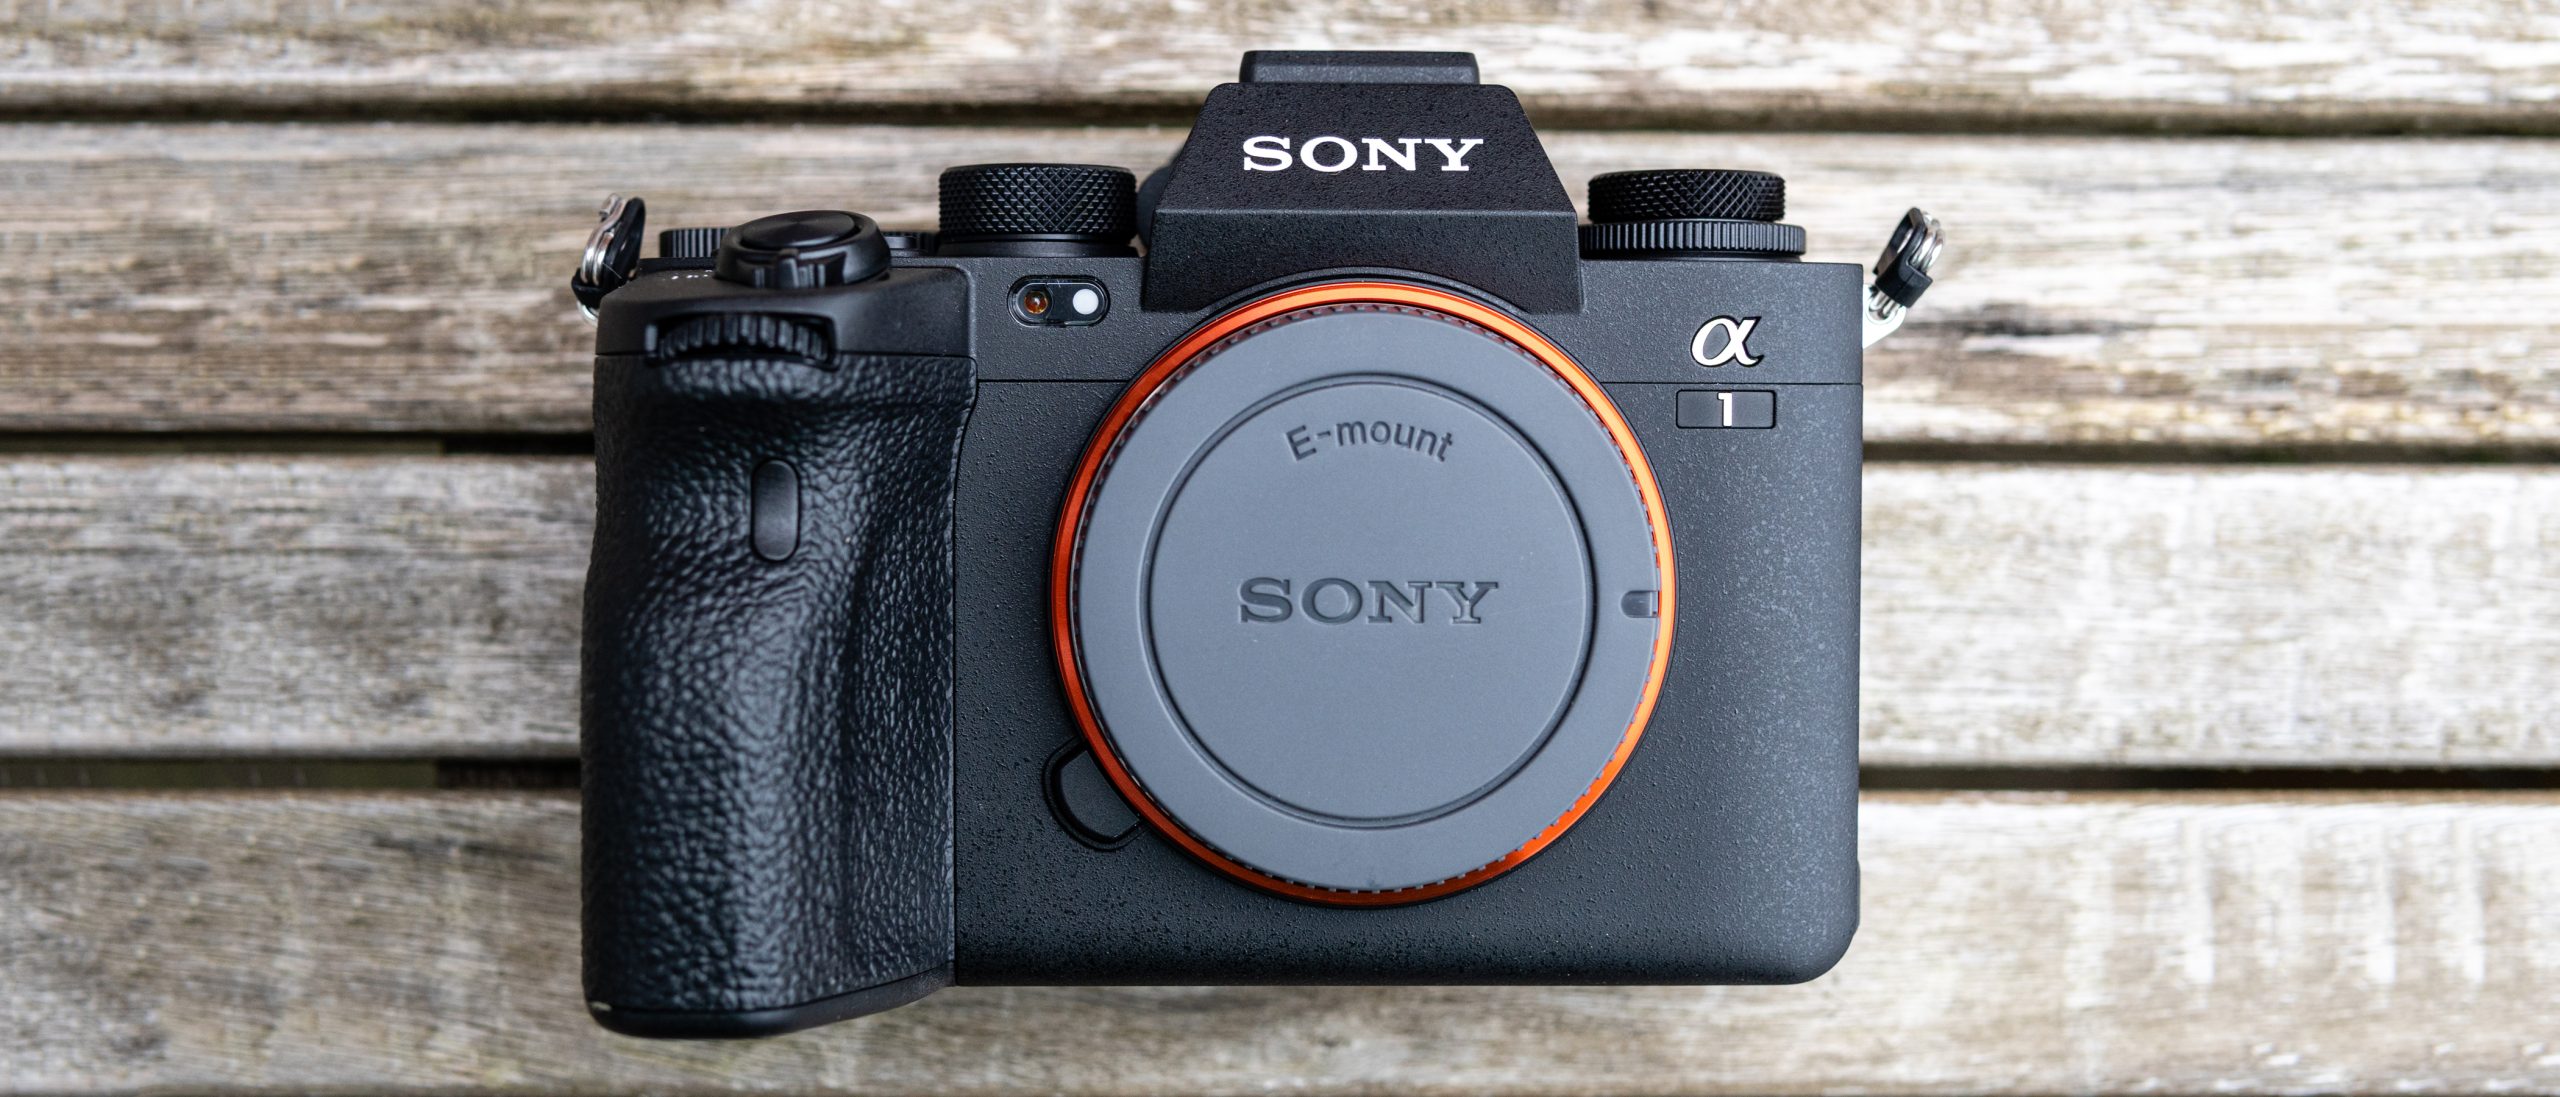 دوربین بدون آینه سونی Sony Alpha a1 Mirrorless Body